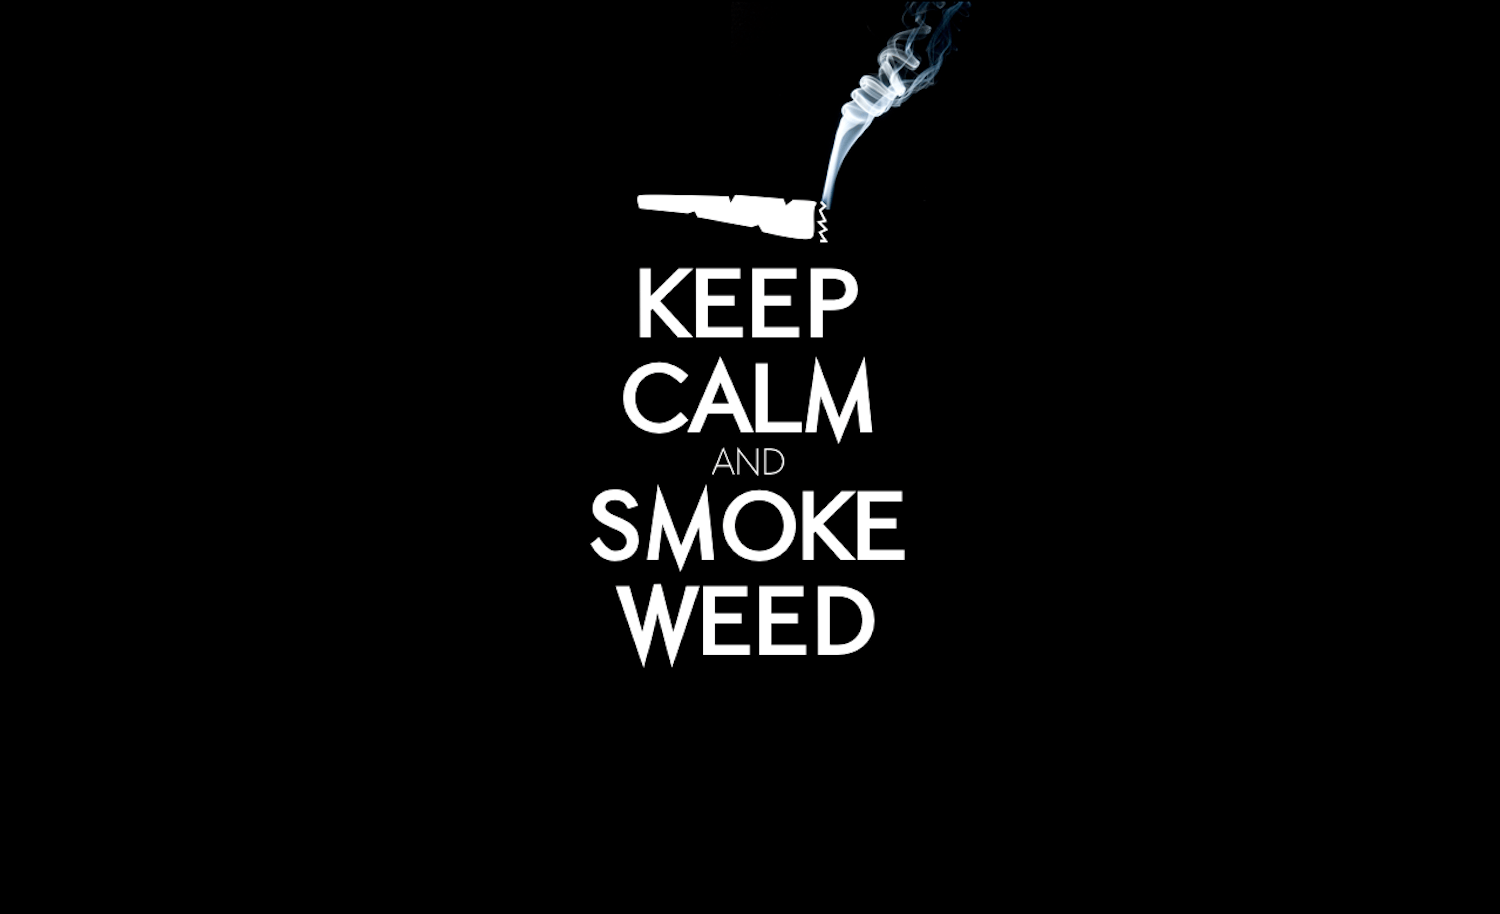 Smoking Weed Wallpapers - Top Free